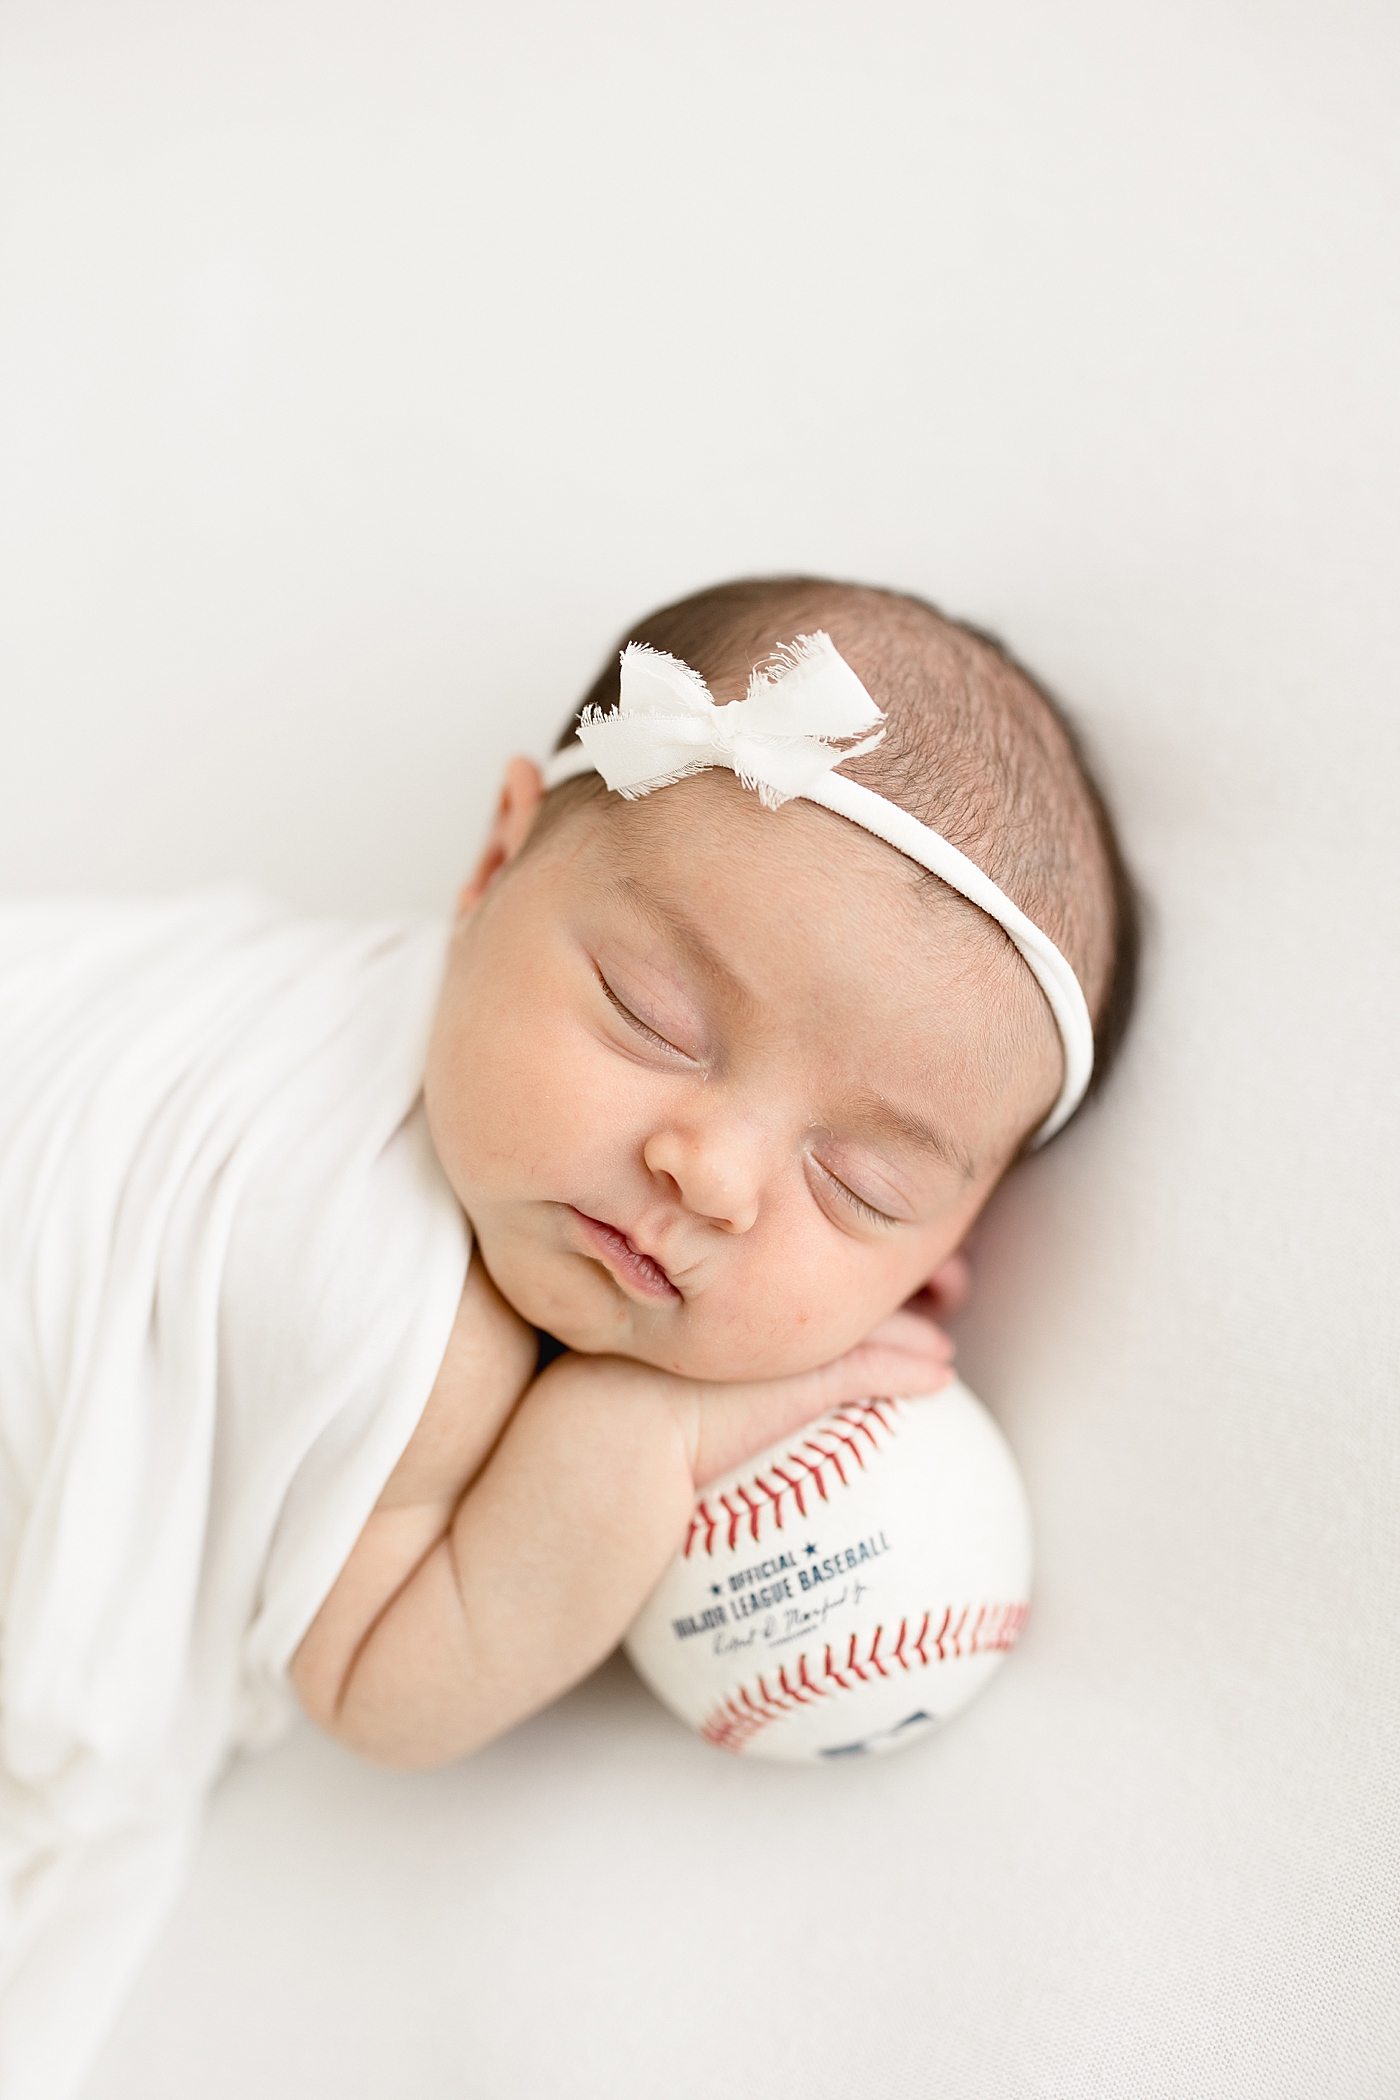 Newborn posing on baseball. Photo by Brittany Elise Photography.